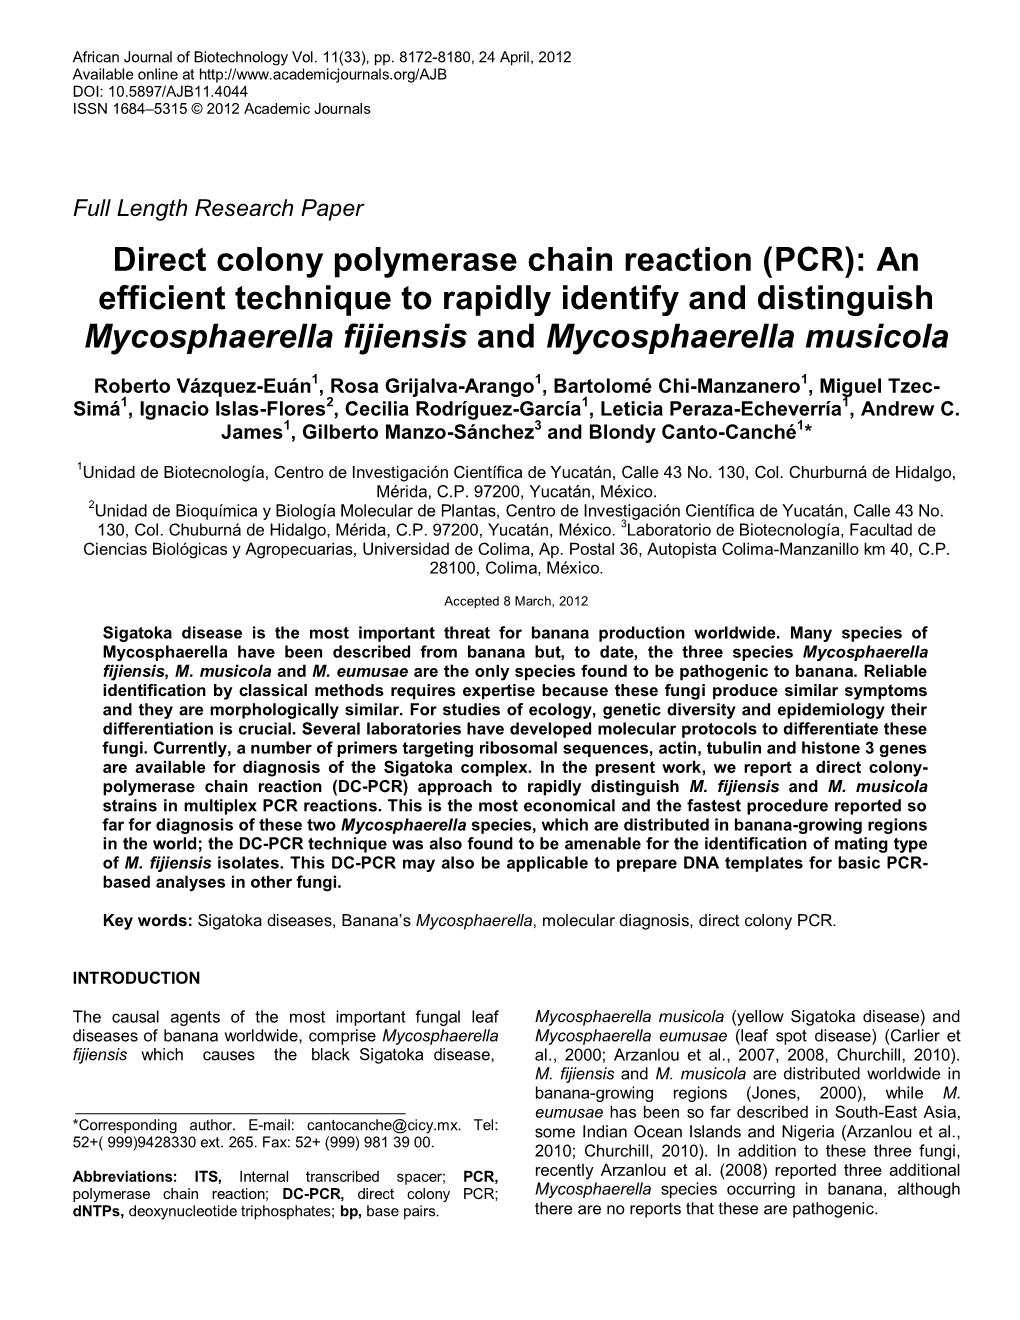 Improving Time in Molecular Identification of Mycosphaerella Fijiensis and Mycosphaerella Musicola by Direct Colony